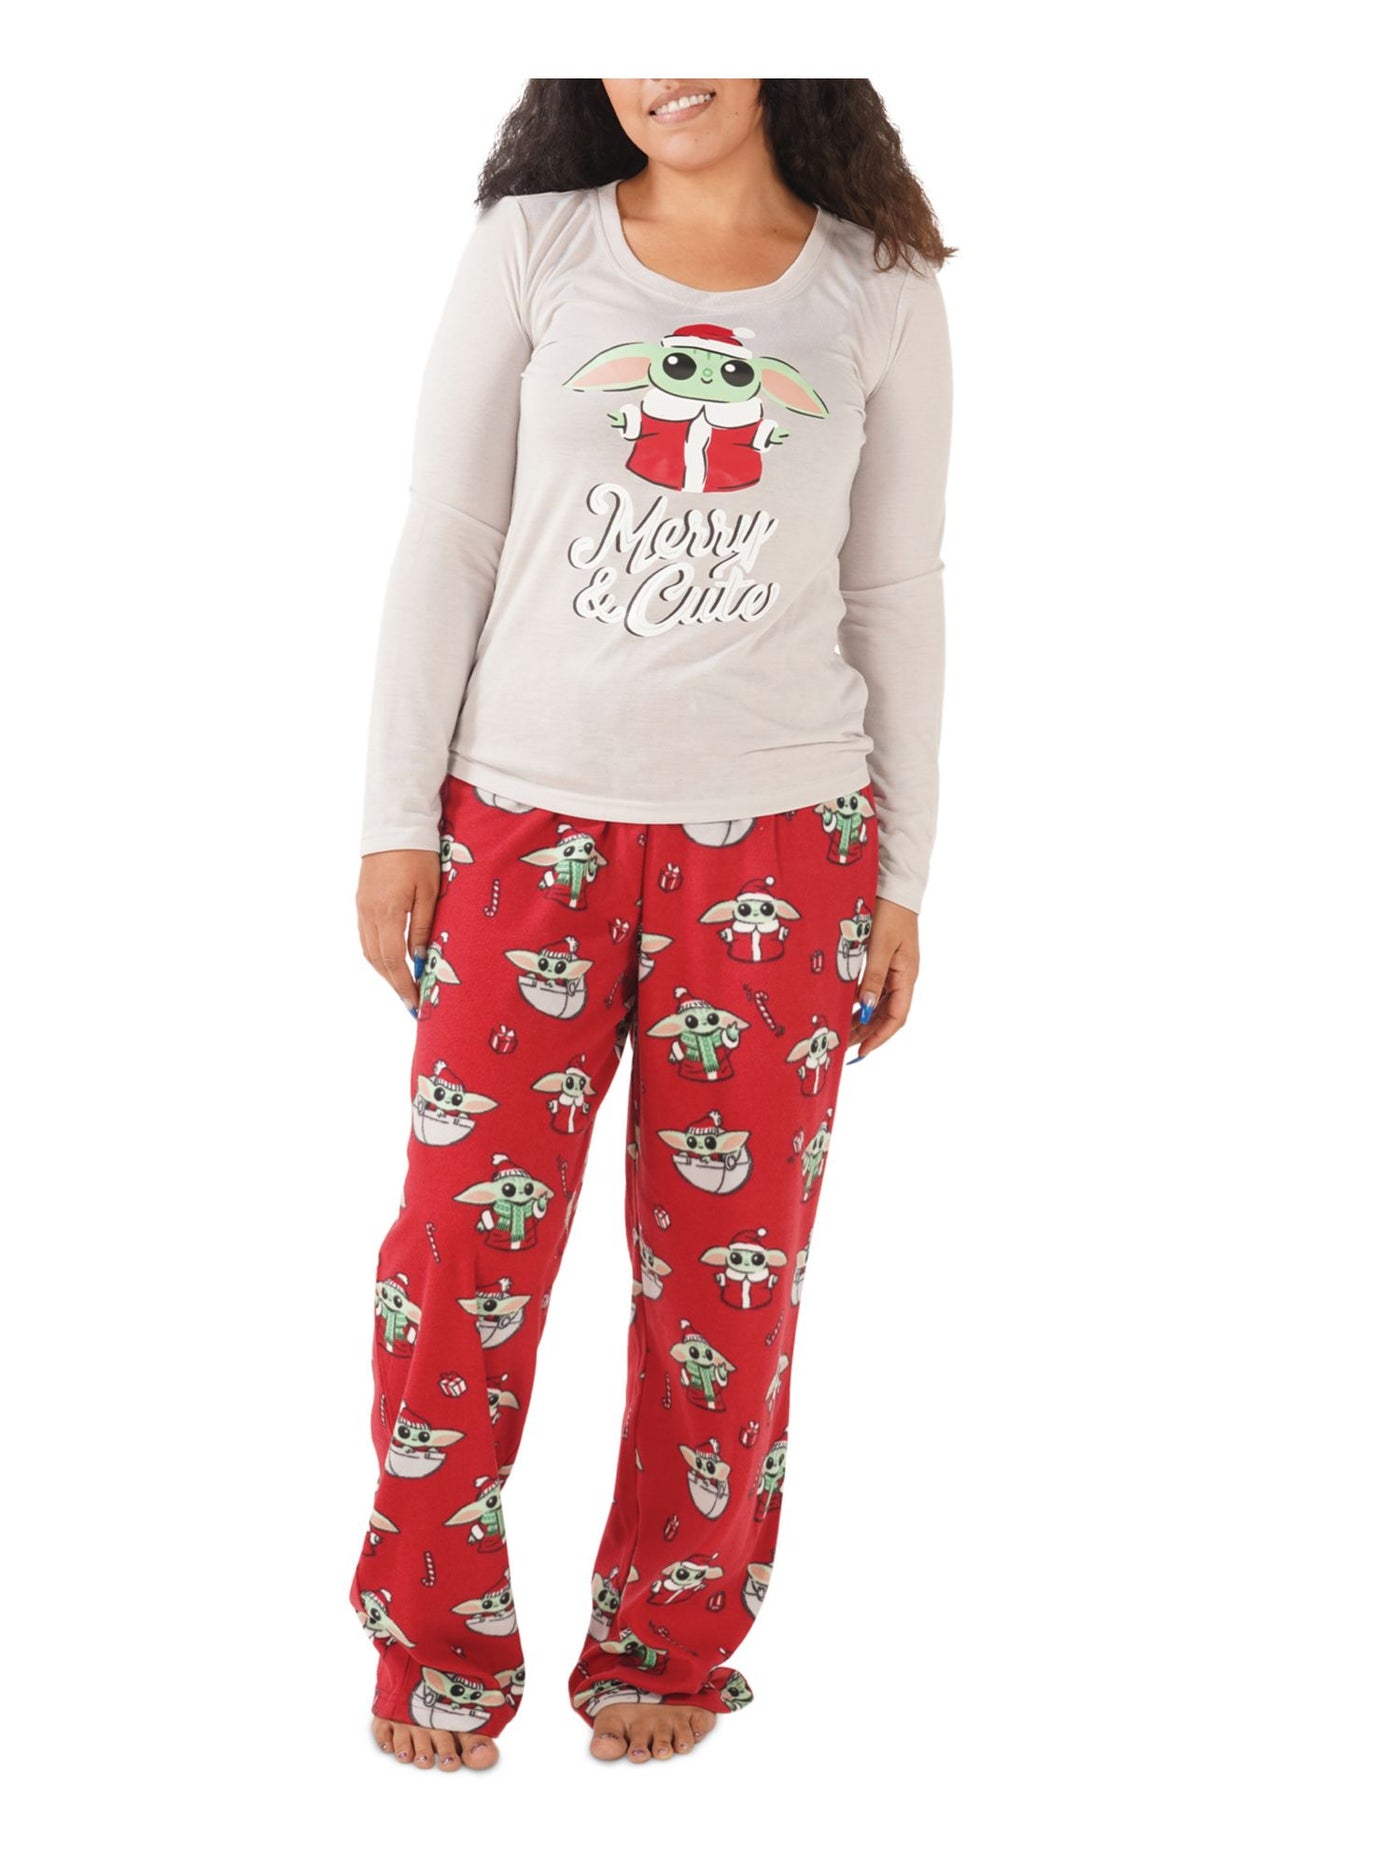 HYBRID APPAREL Womens Red Graphic Top Elastic Band Straight leg Pants Pajamas Plus 1X